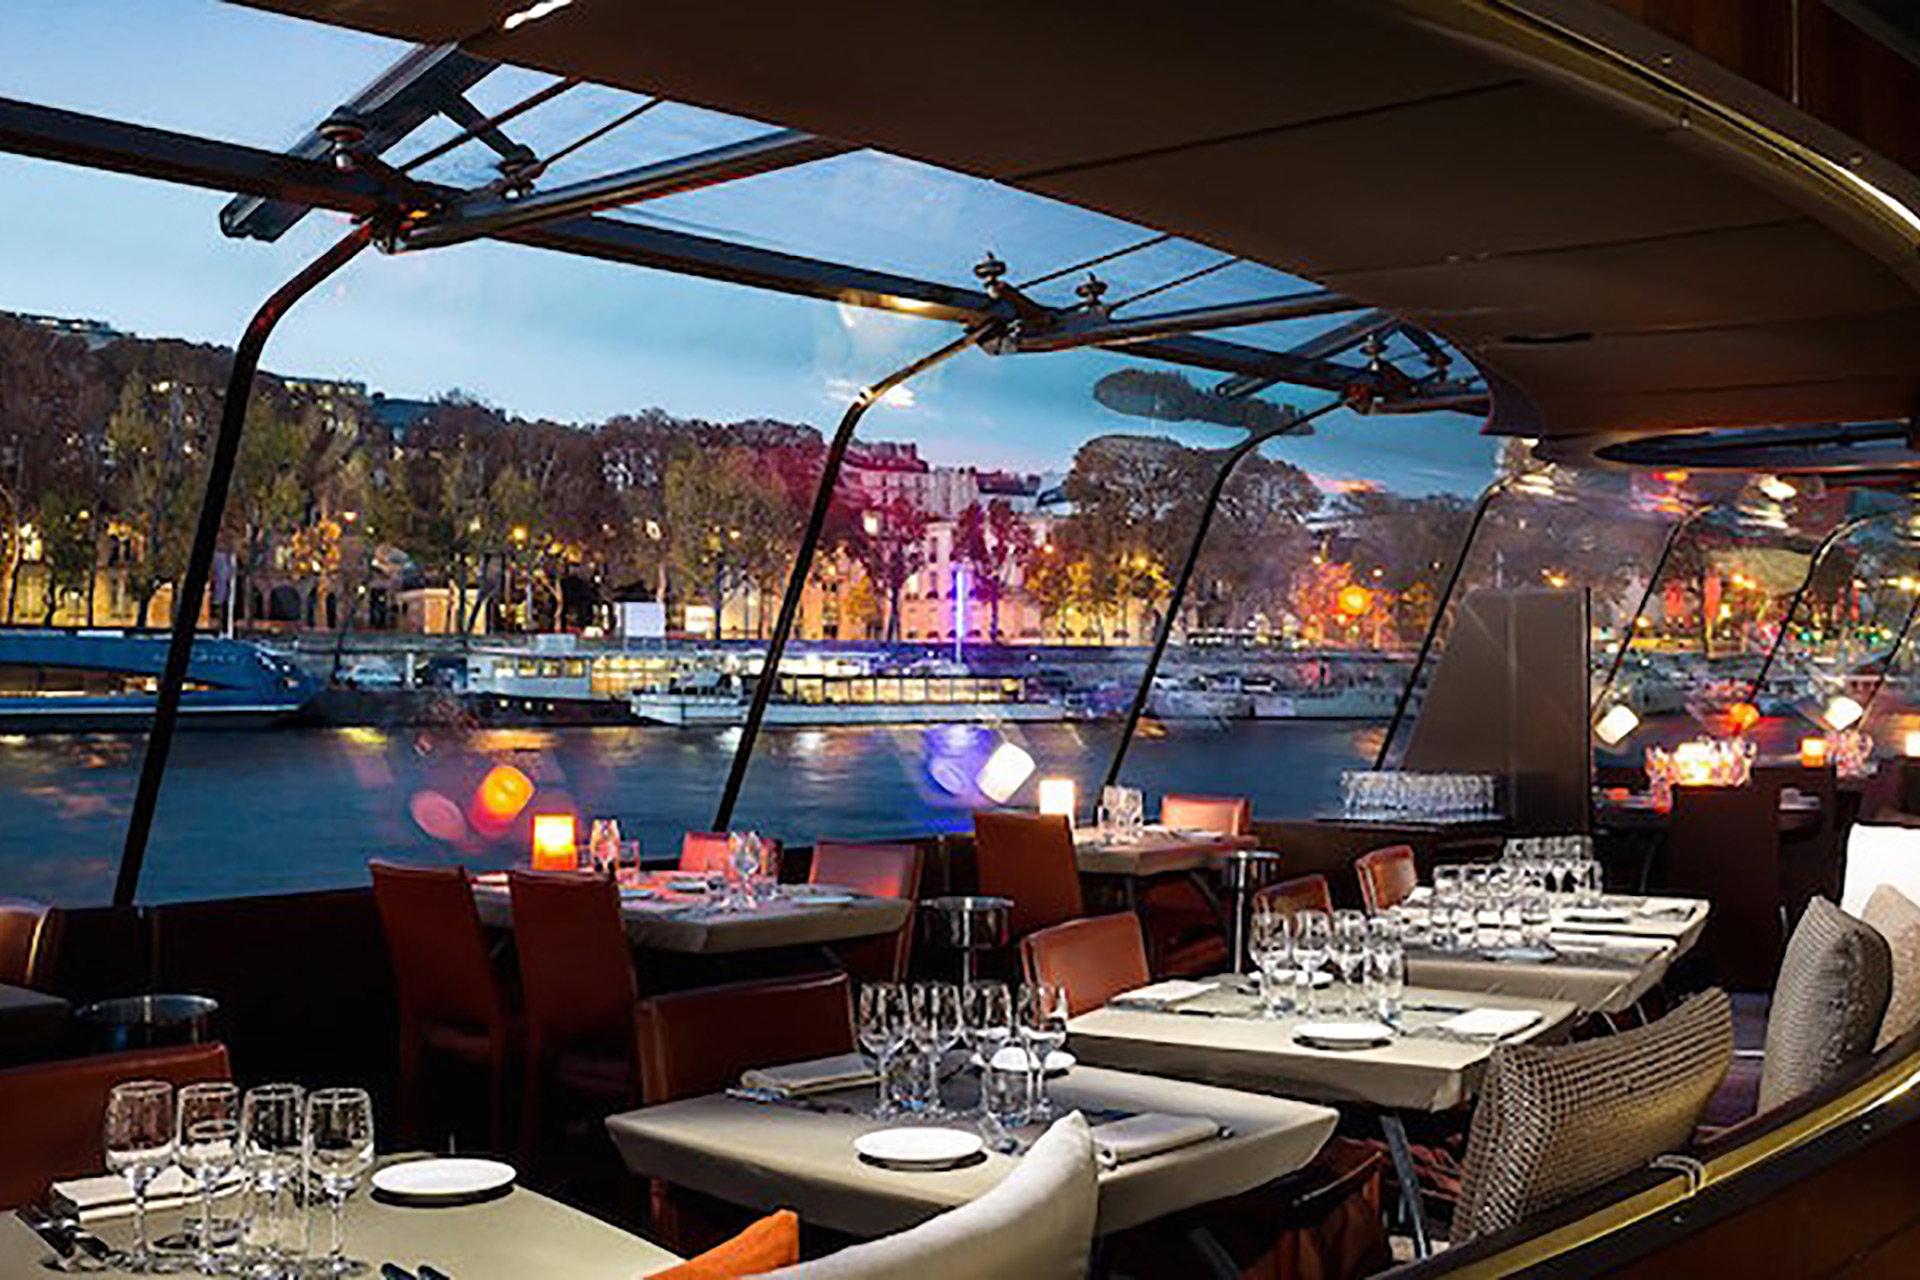 dinner cruises on the seine river in paris